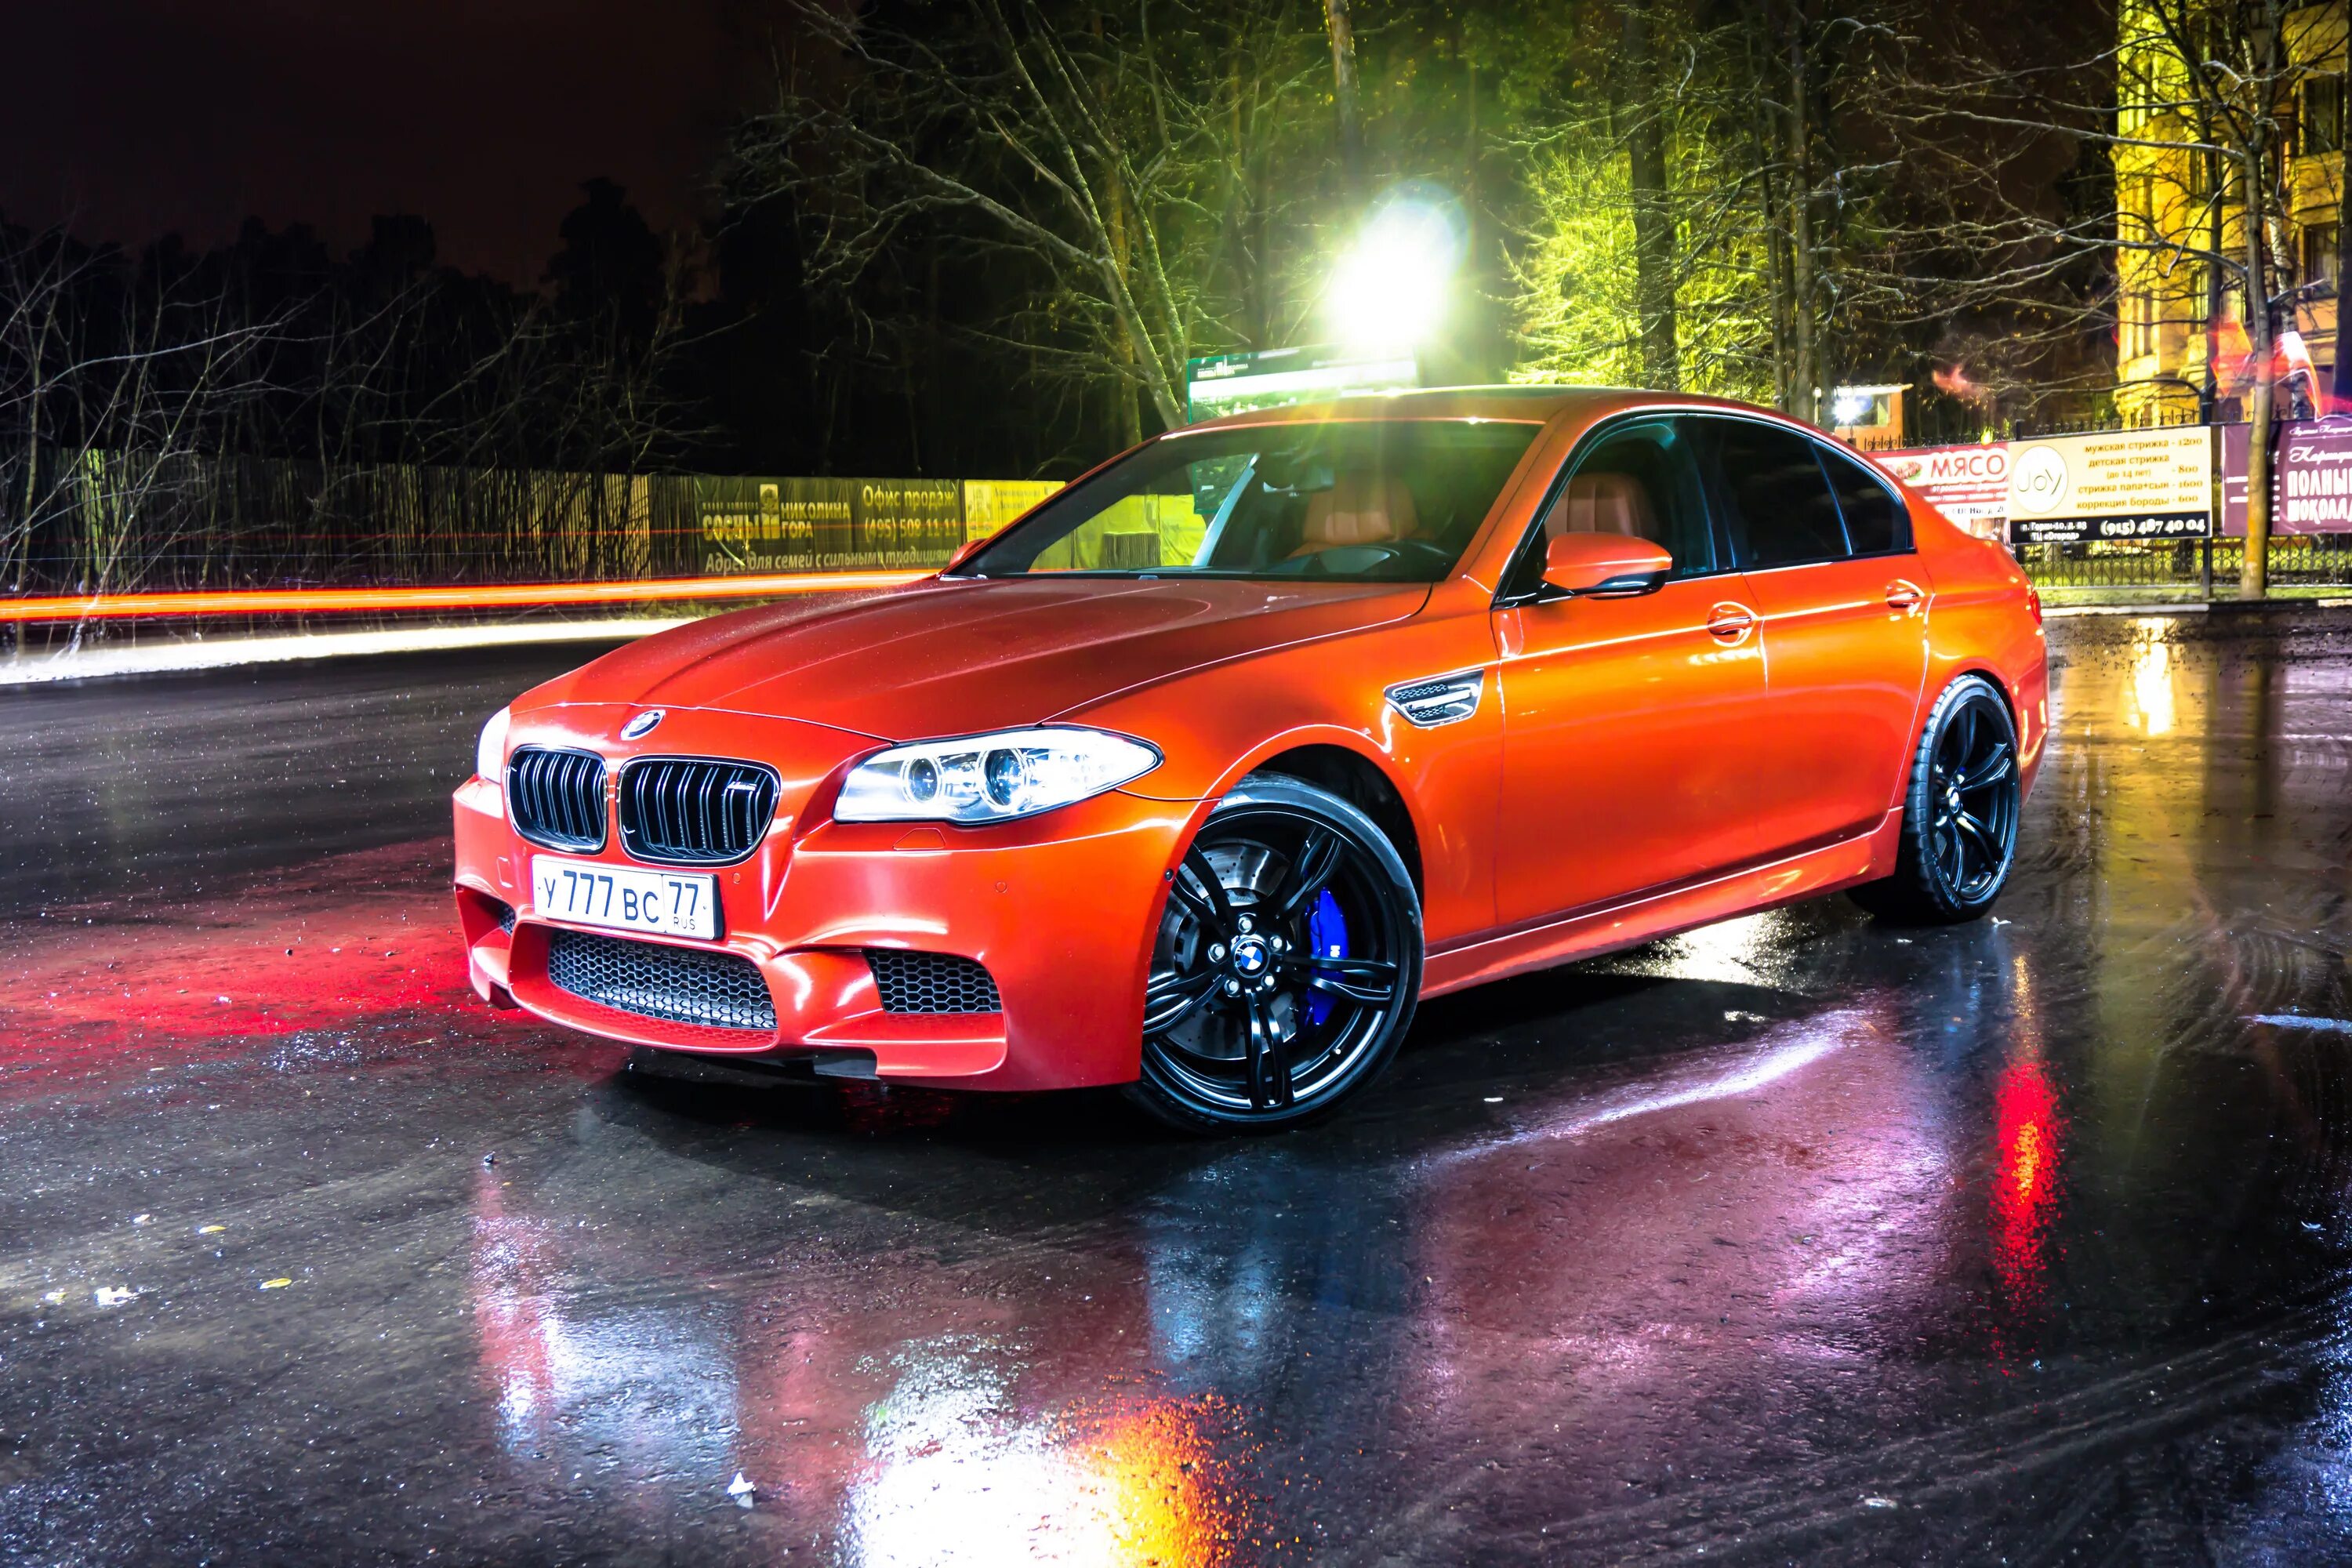 BMW m5 f10 Orange. BMW m5 f10 красная. BMW m5 f10 оранжевая. BMW m3 f10. Лучшая бмв м5